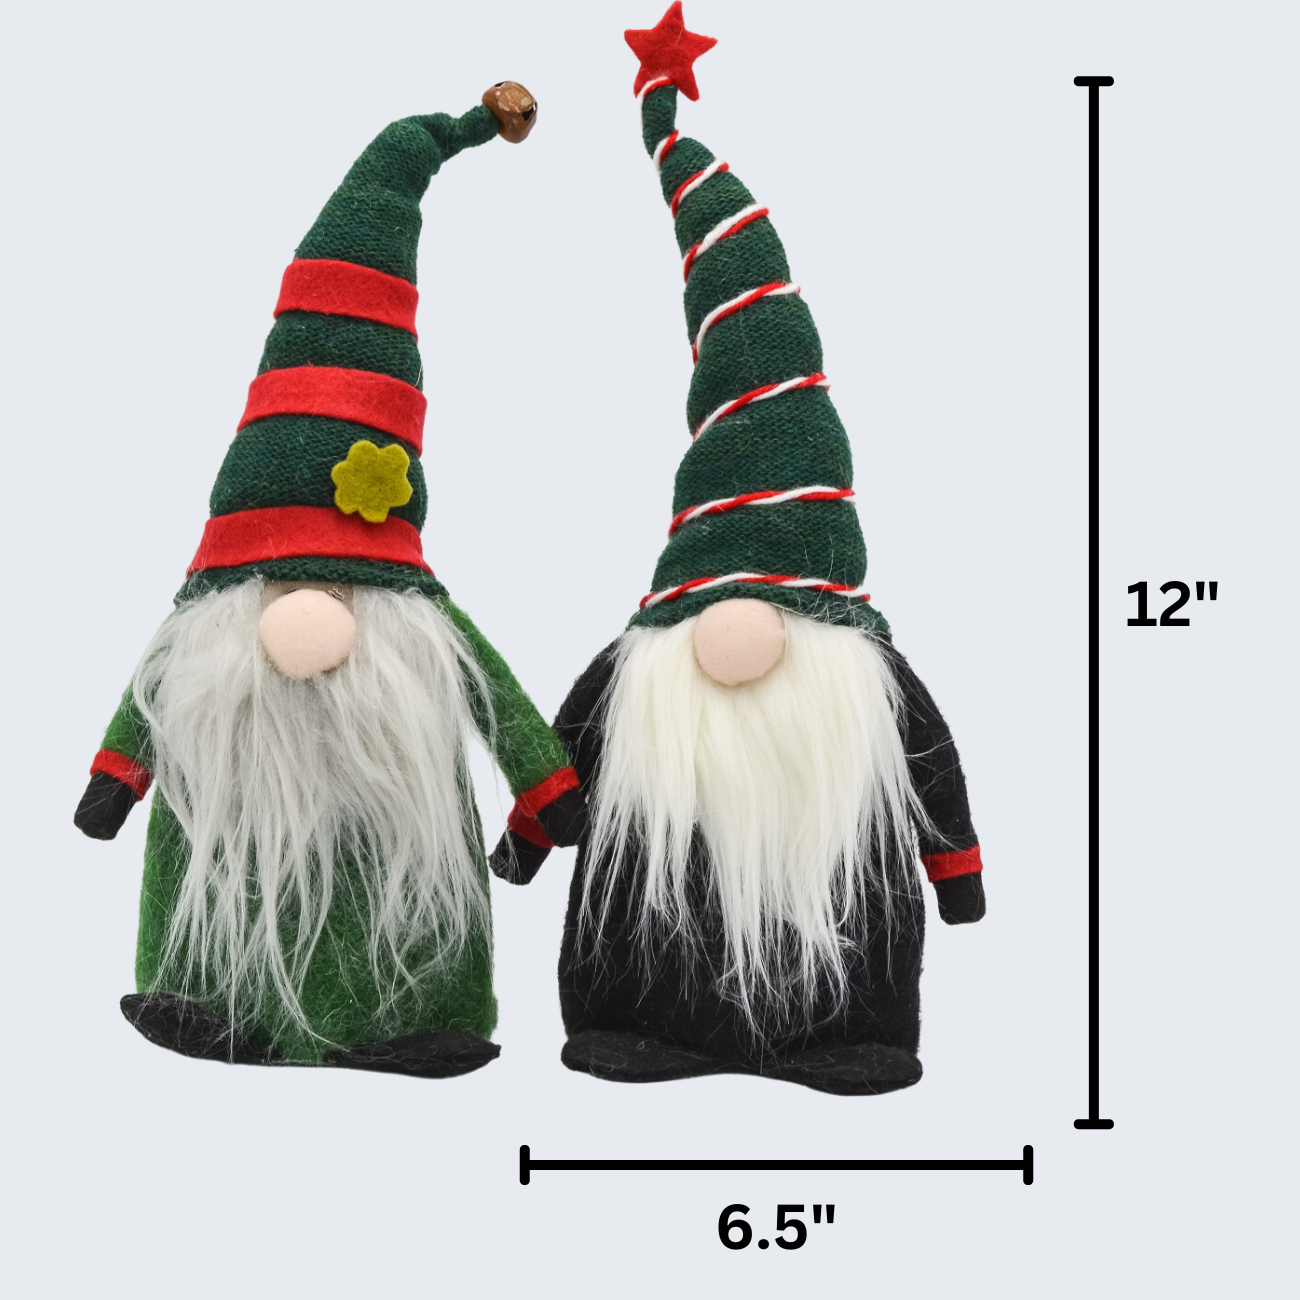 Pair of 12" Christmas Gnomes